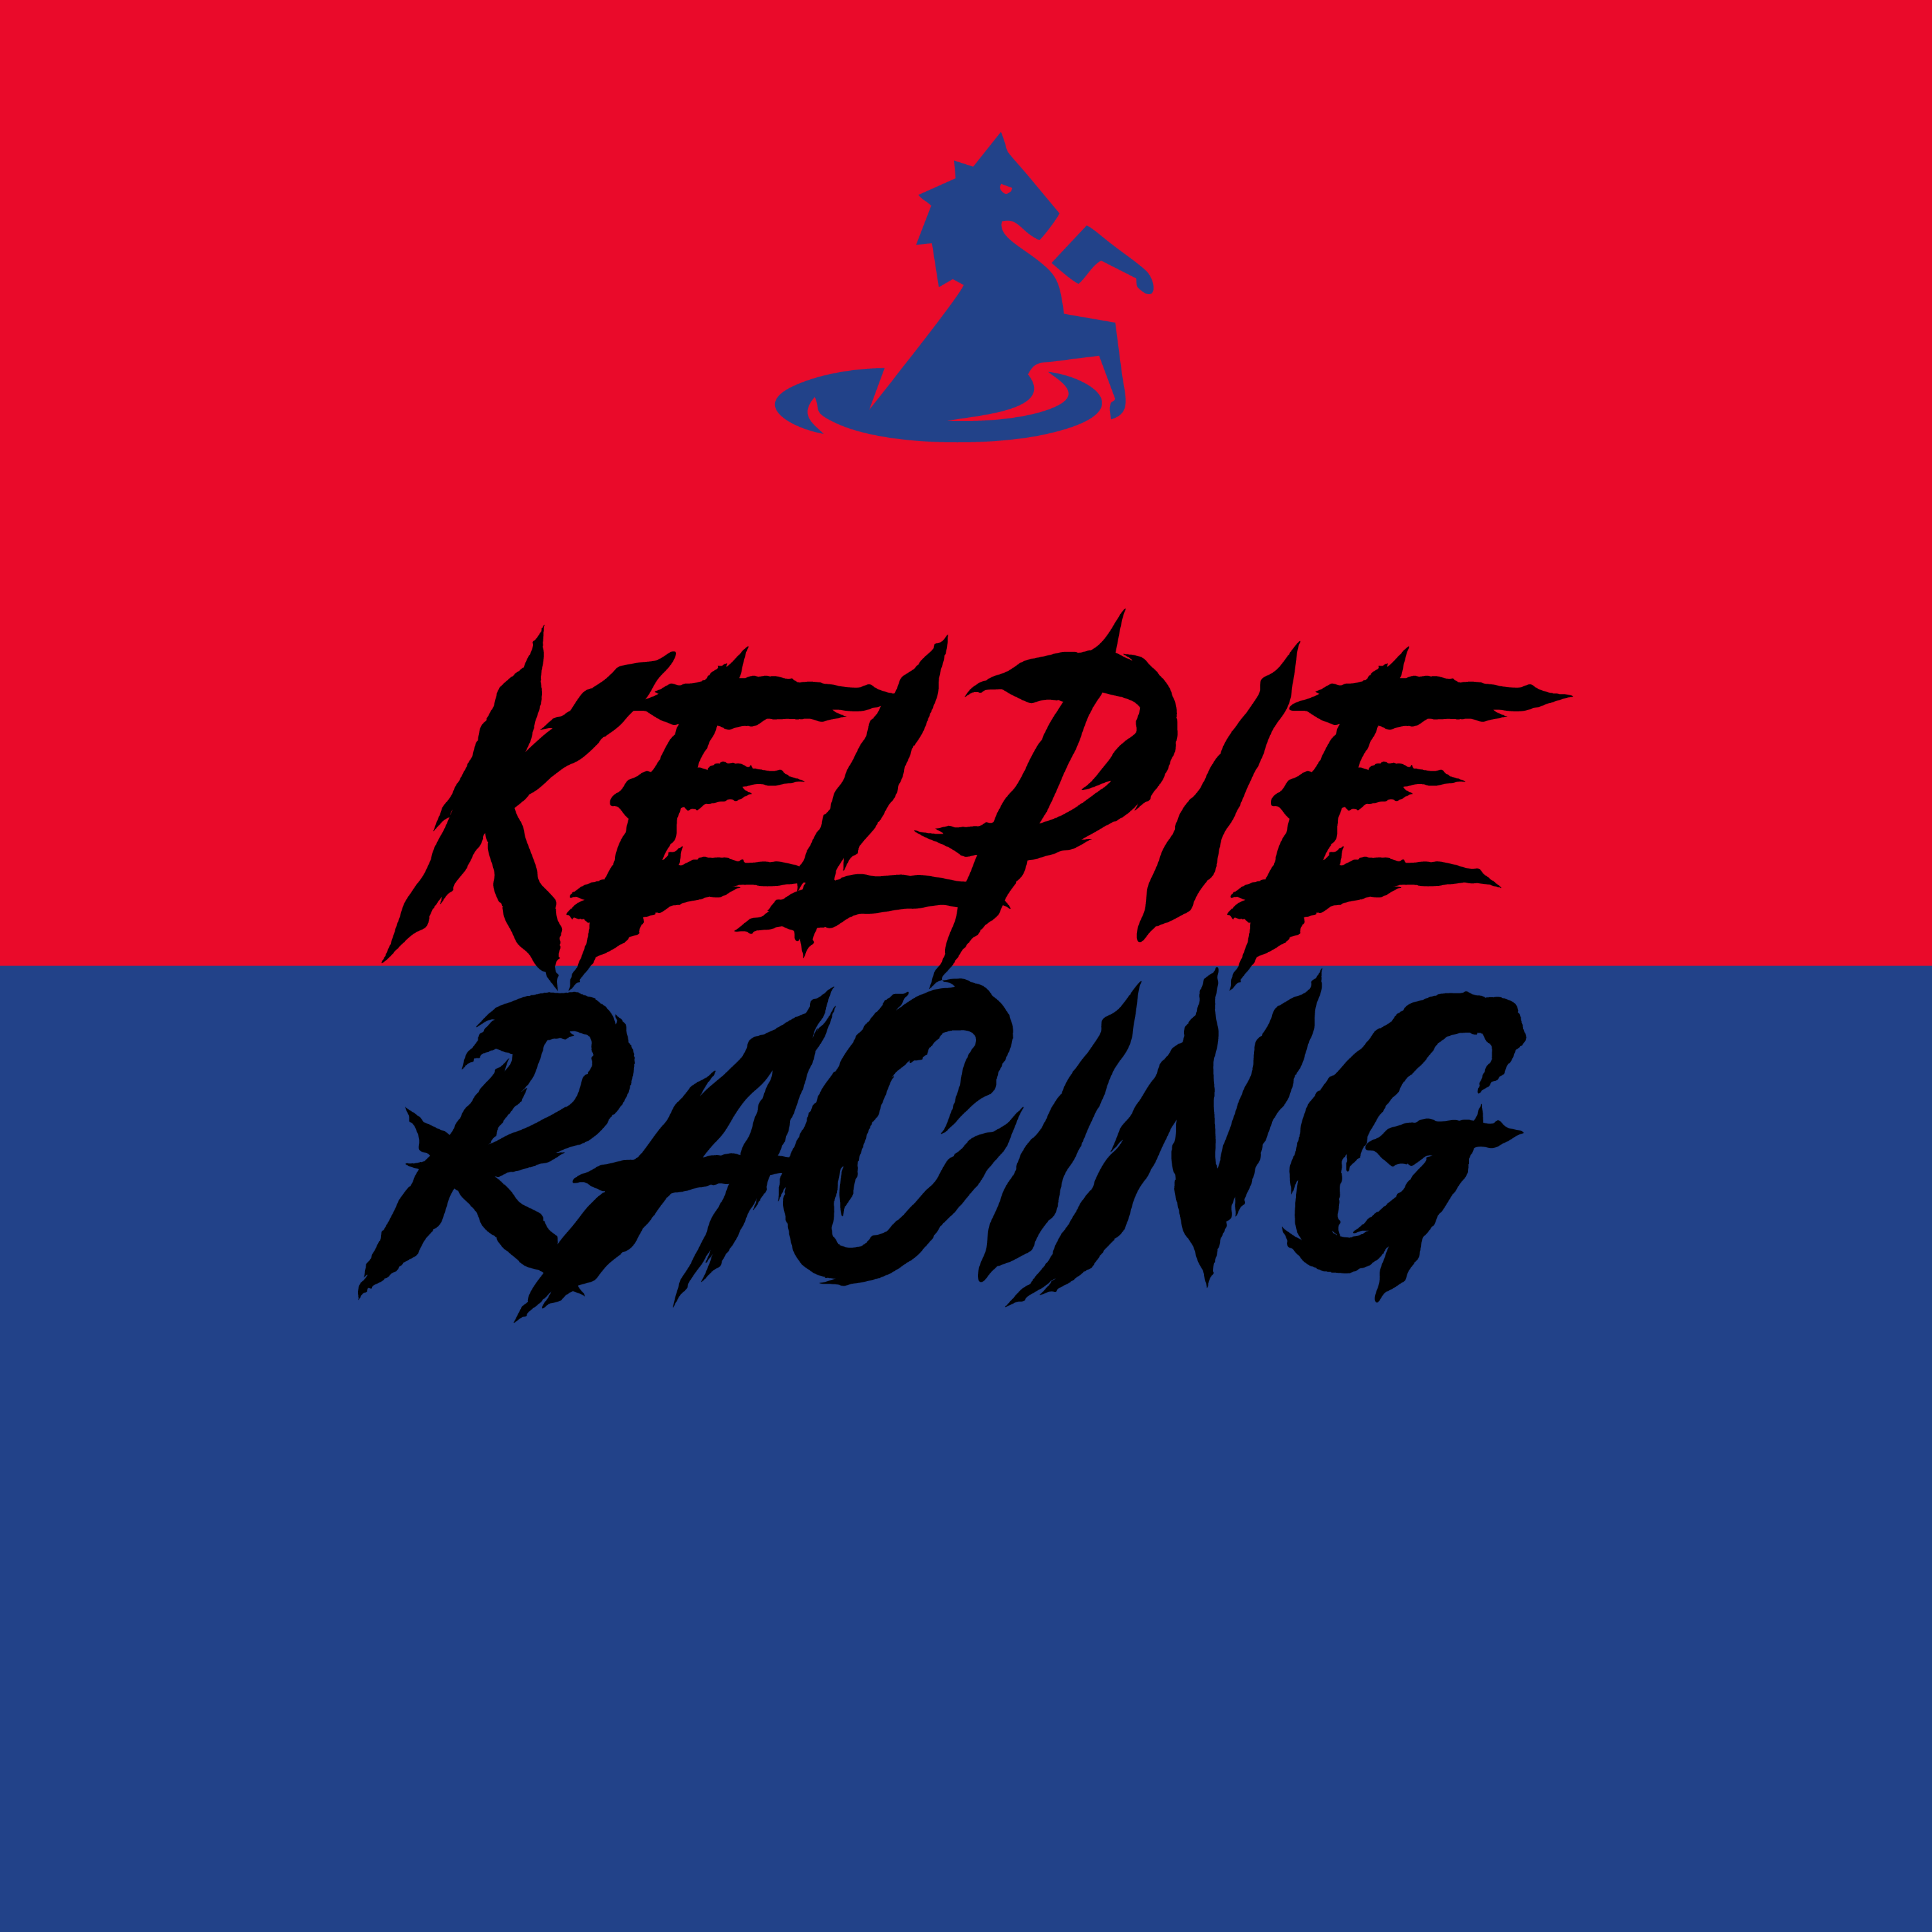 Club Image for KELPIE RACING